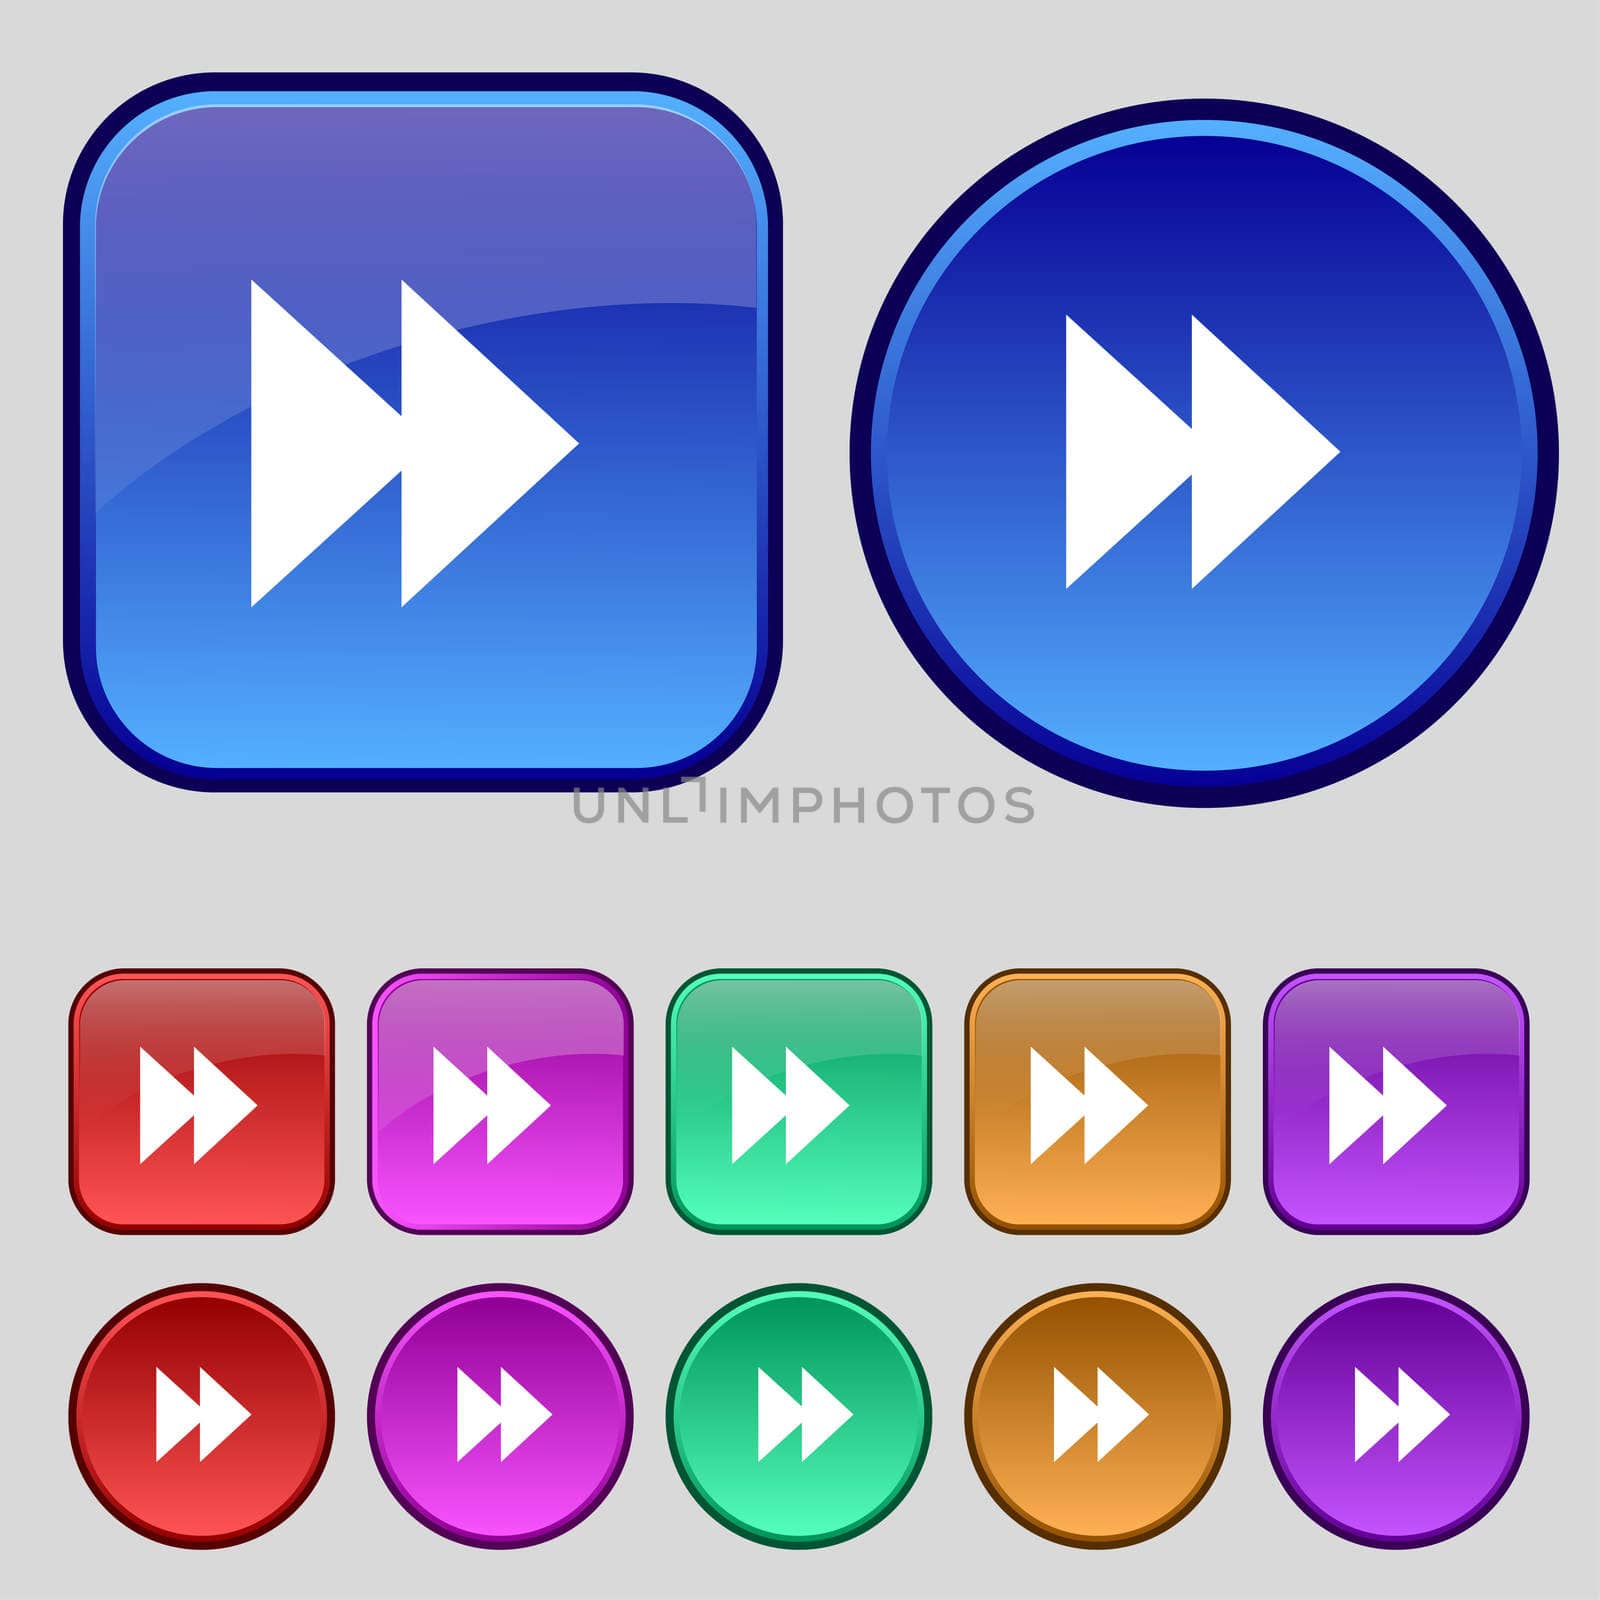 rewind icon sign. A set of twelve vintage buttons for your design. illustration